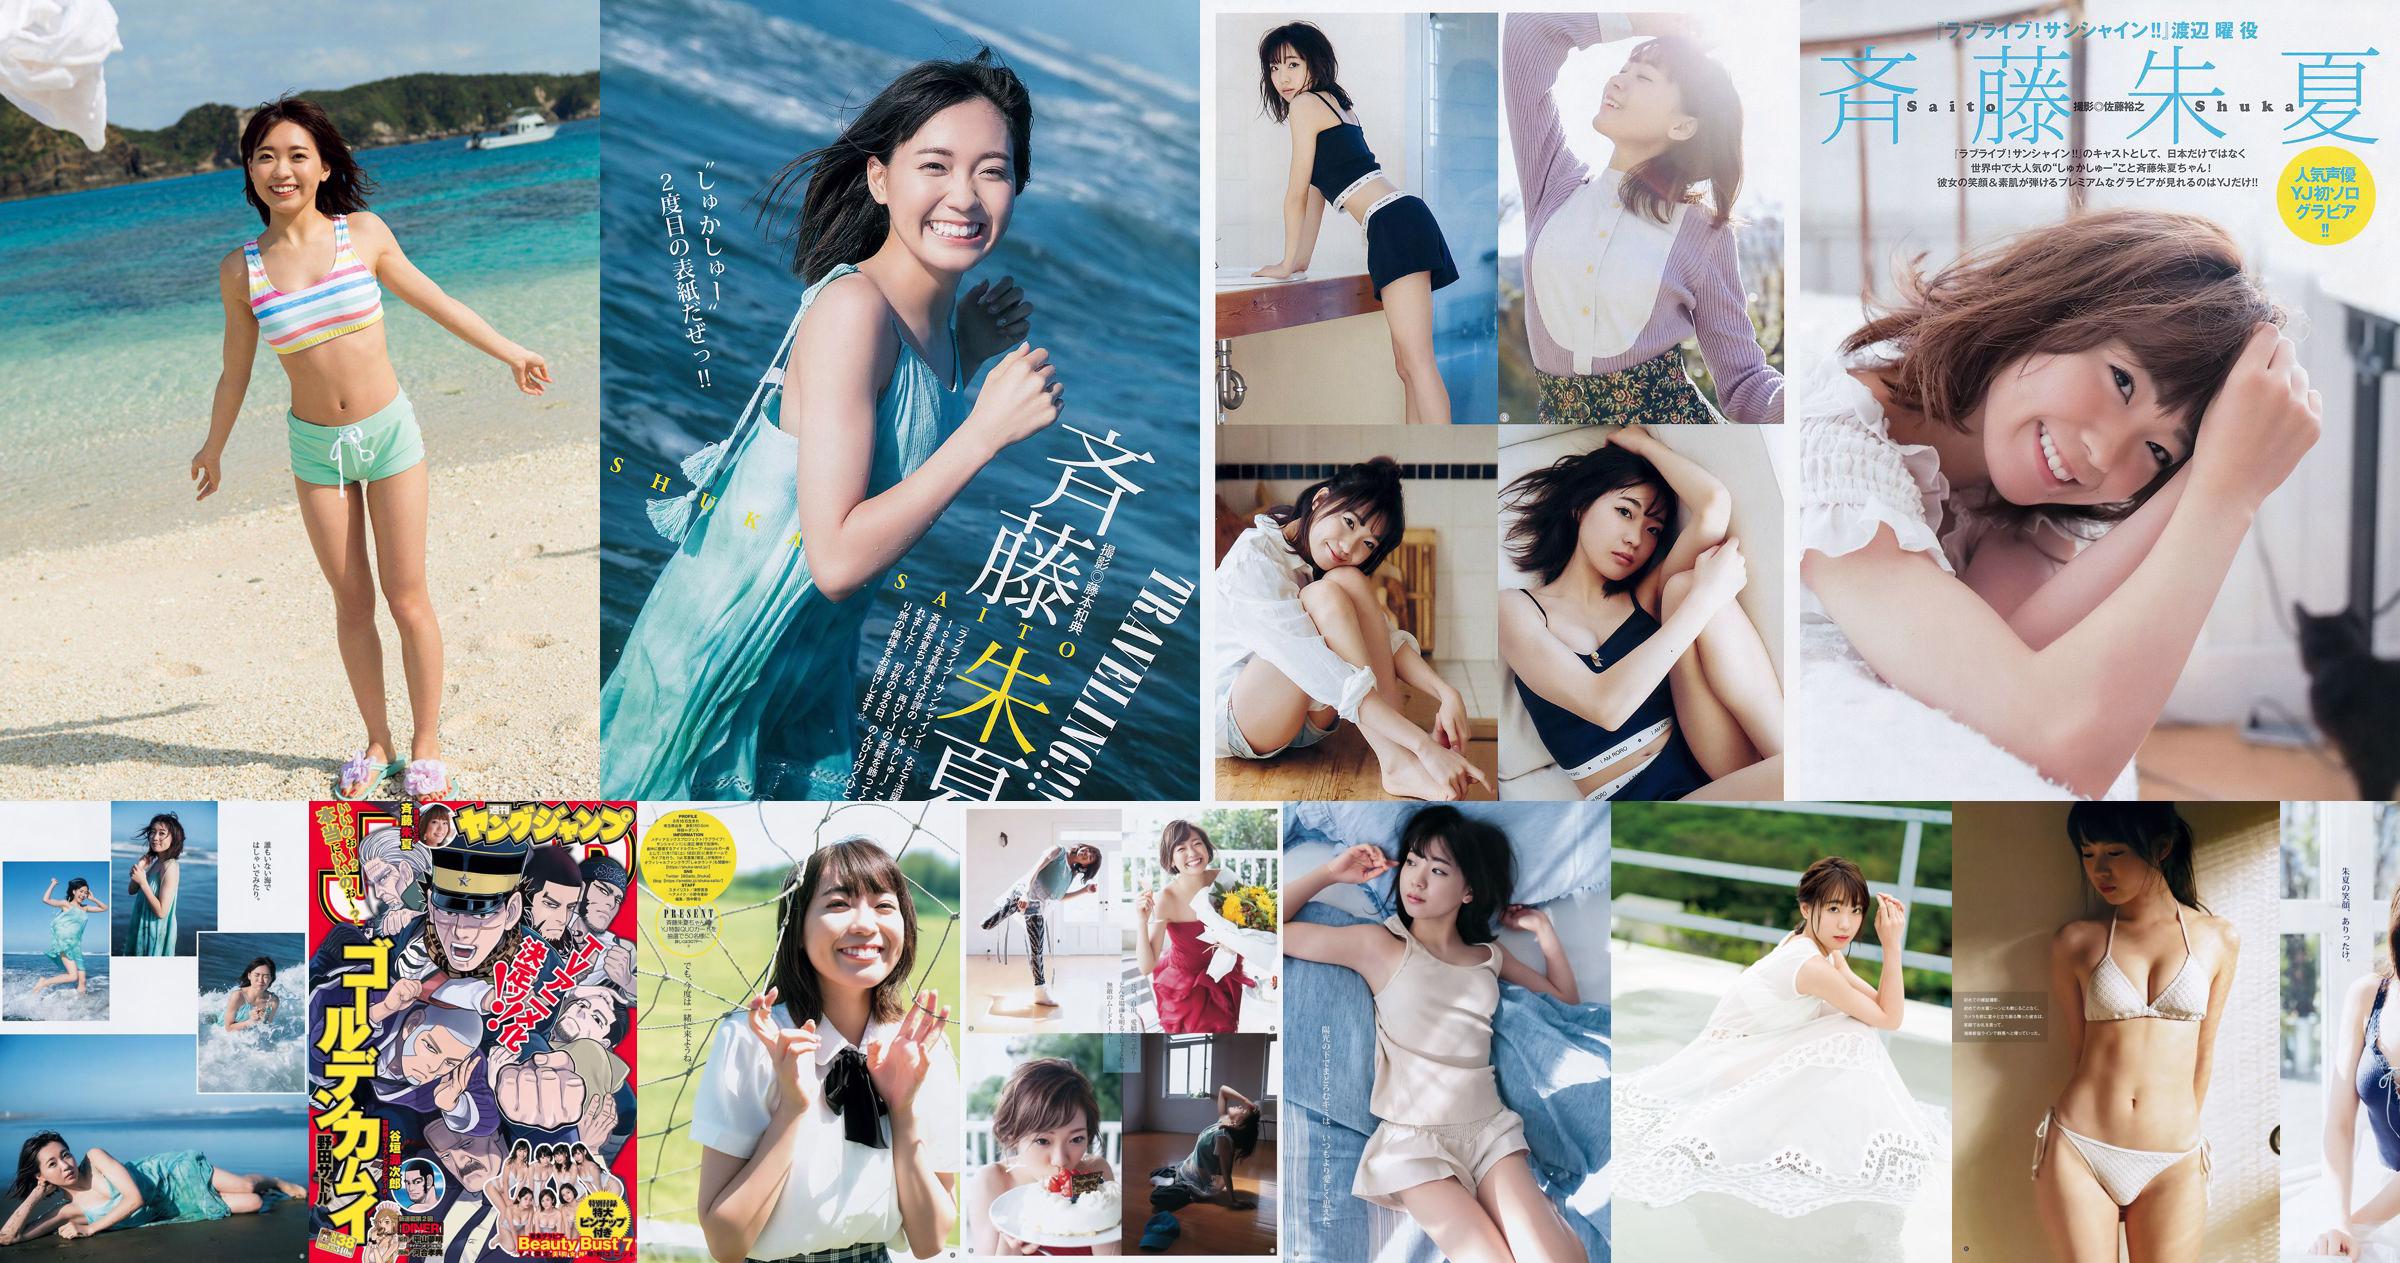 Ito Mirai Toyota Moeie Morisaki Tomomi [Weekly Young Jump] Magazine photo n ° 47 2018 No.a05d07 Page 1